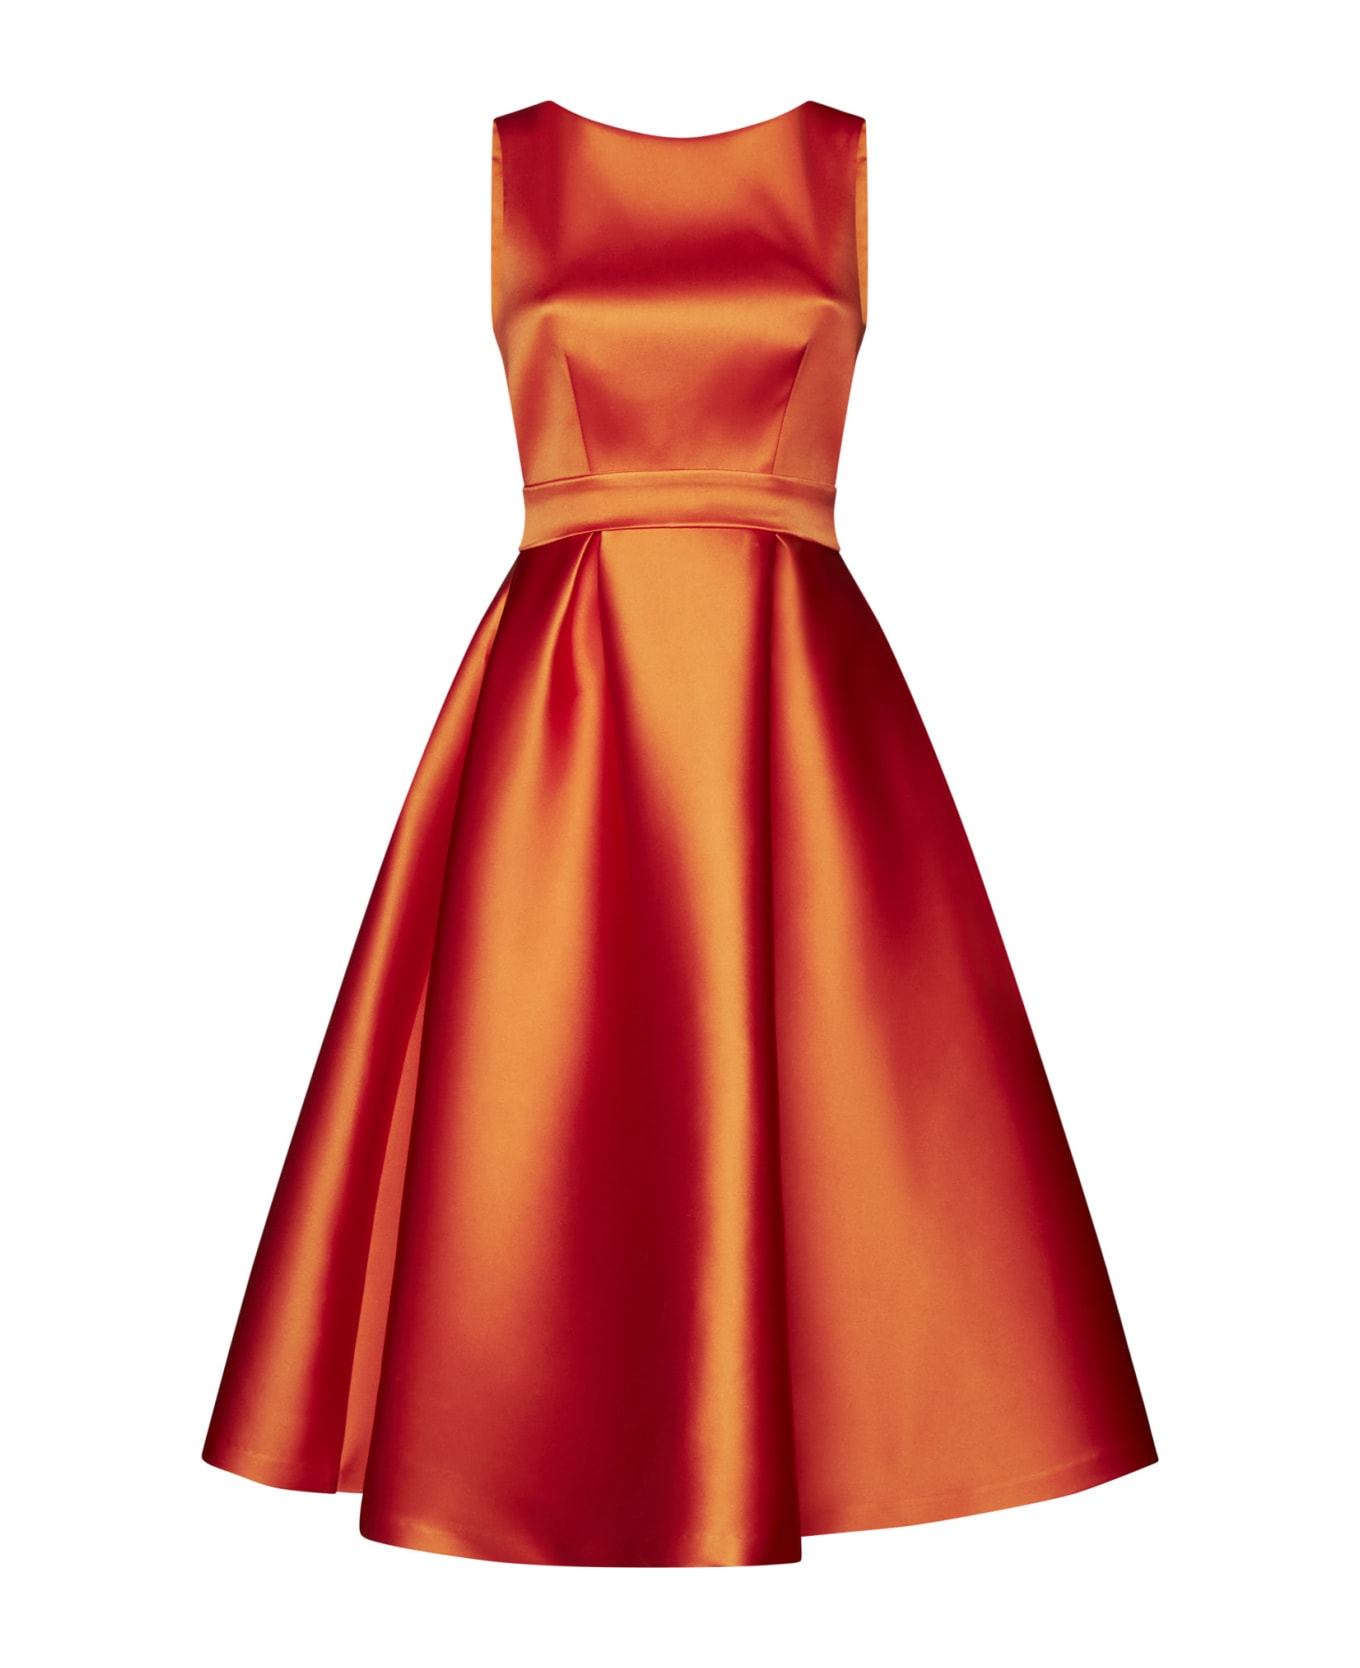 Parosh Dress - Arancio